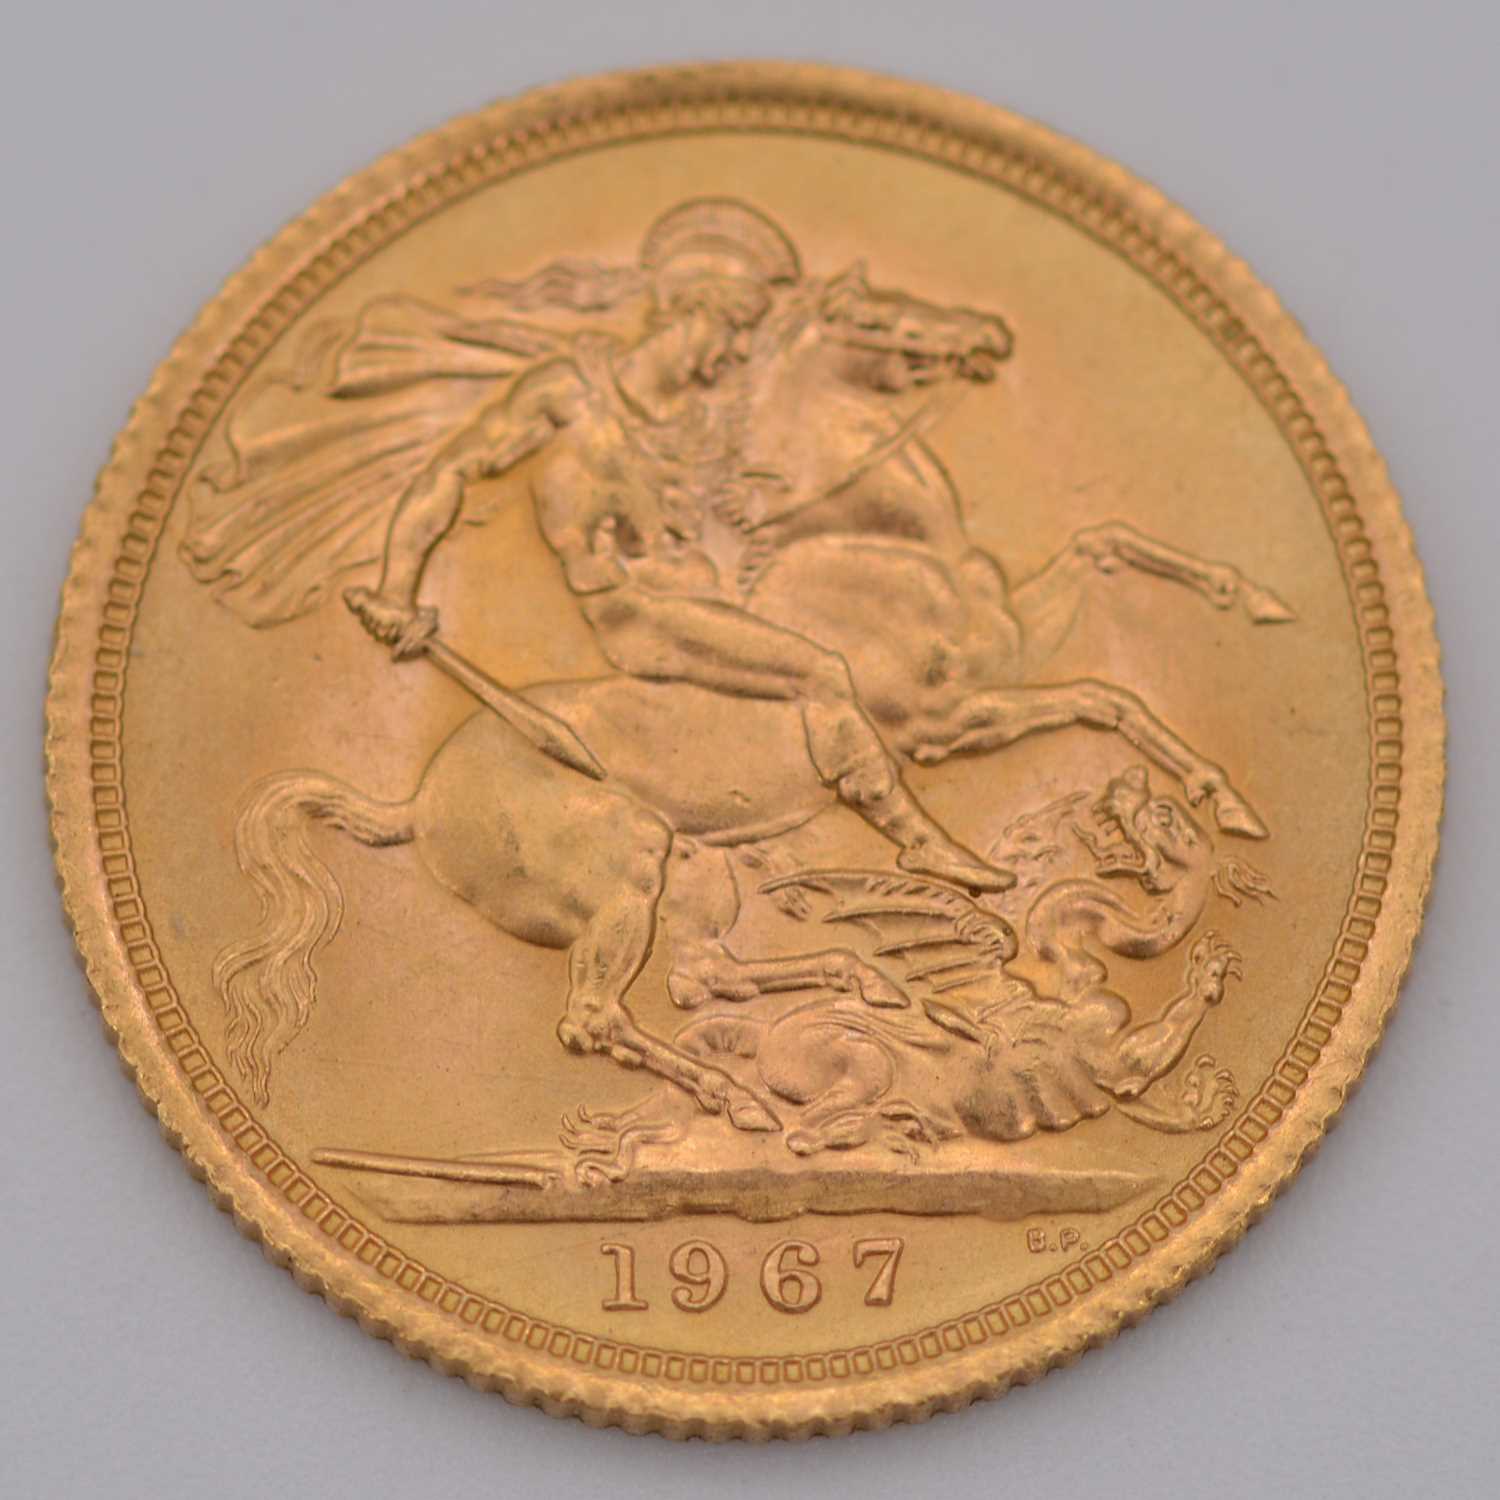 Lot 169 - Elizabeth II gold Sovereign coin, 1967, 8g.